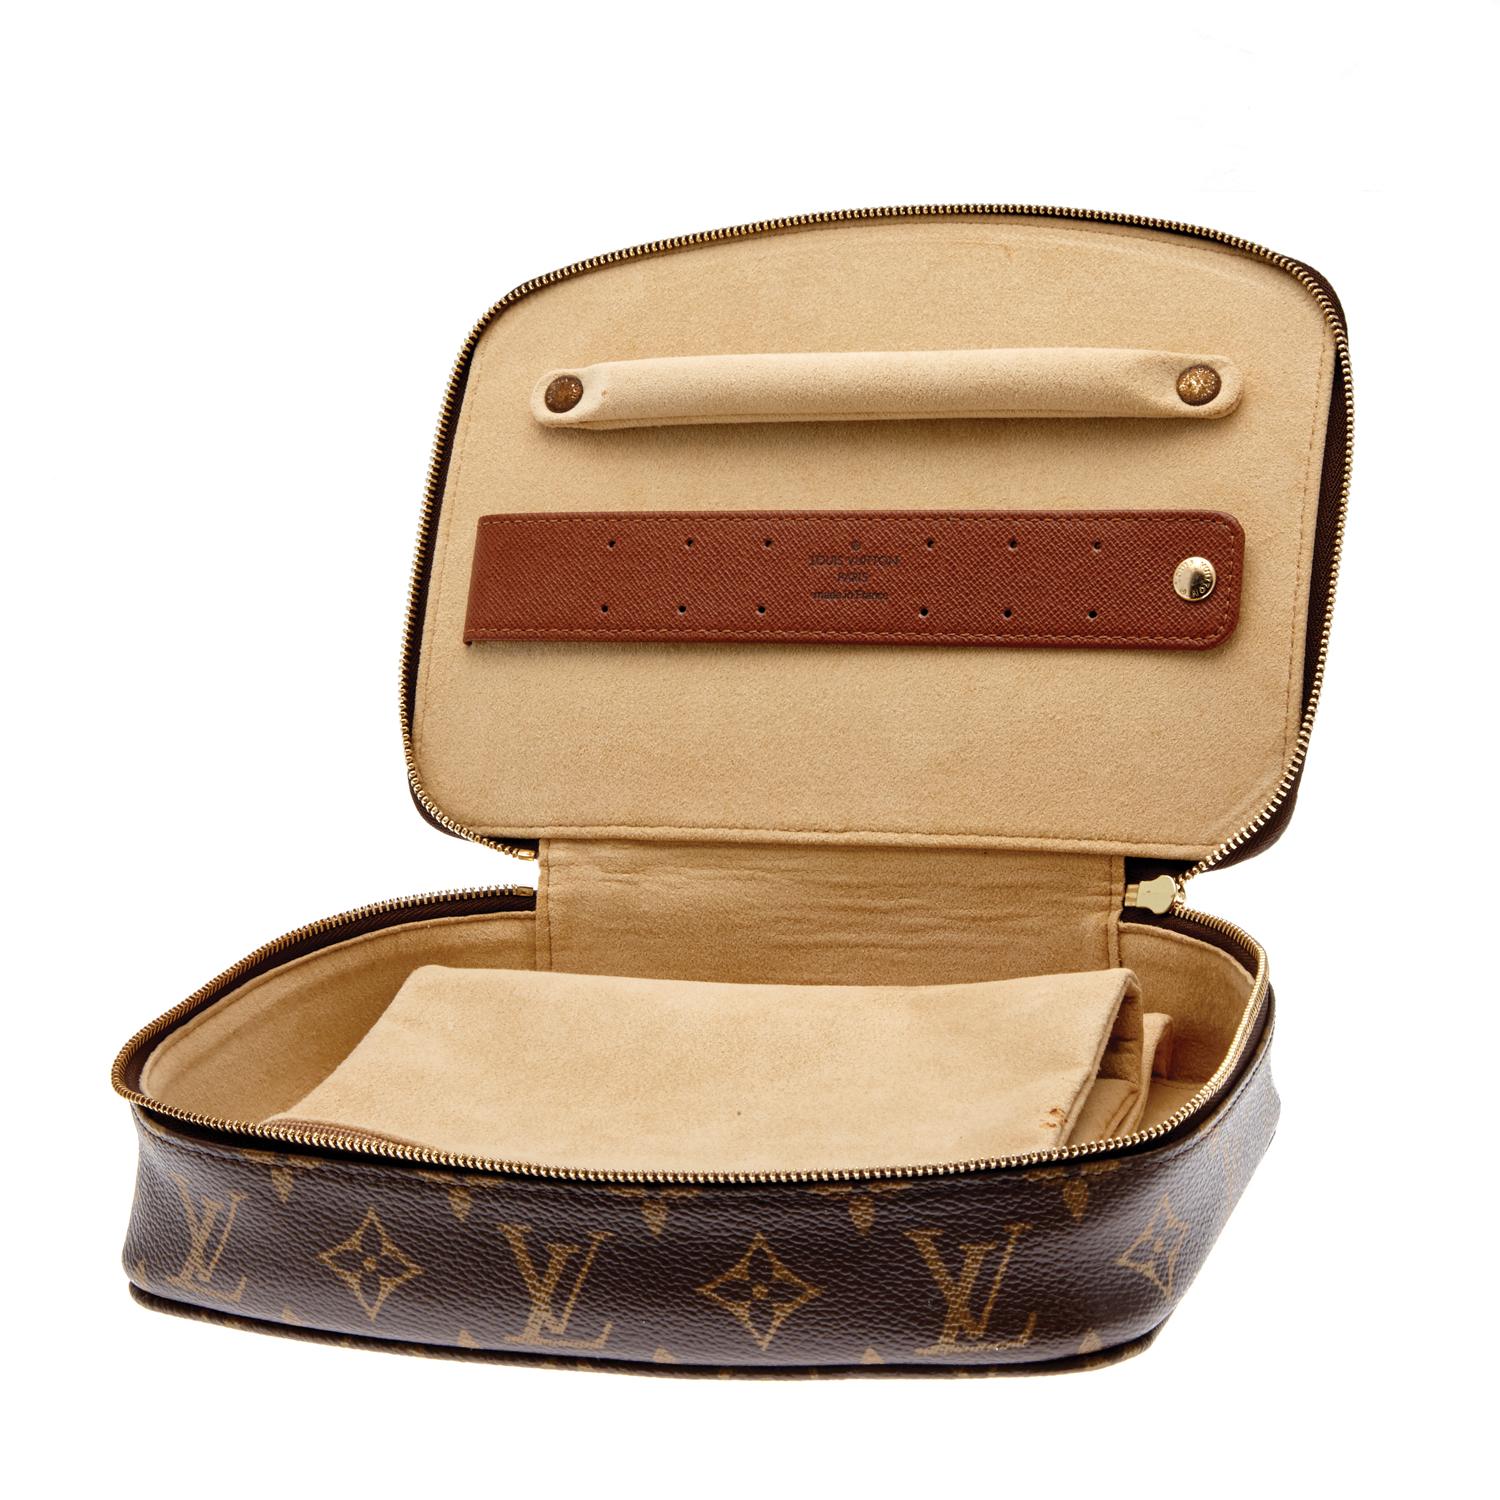 Sold at Auction: Louis Vuitton Monte Carlo Jewellery Case Boite Box